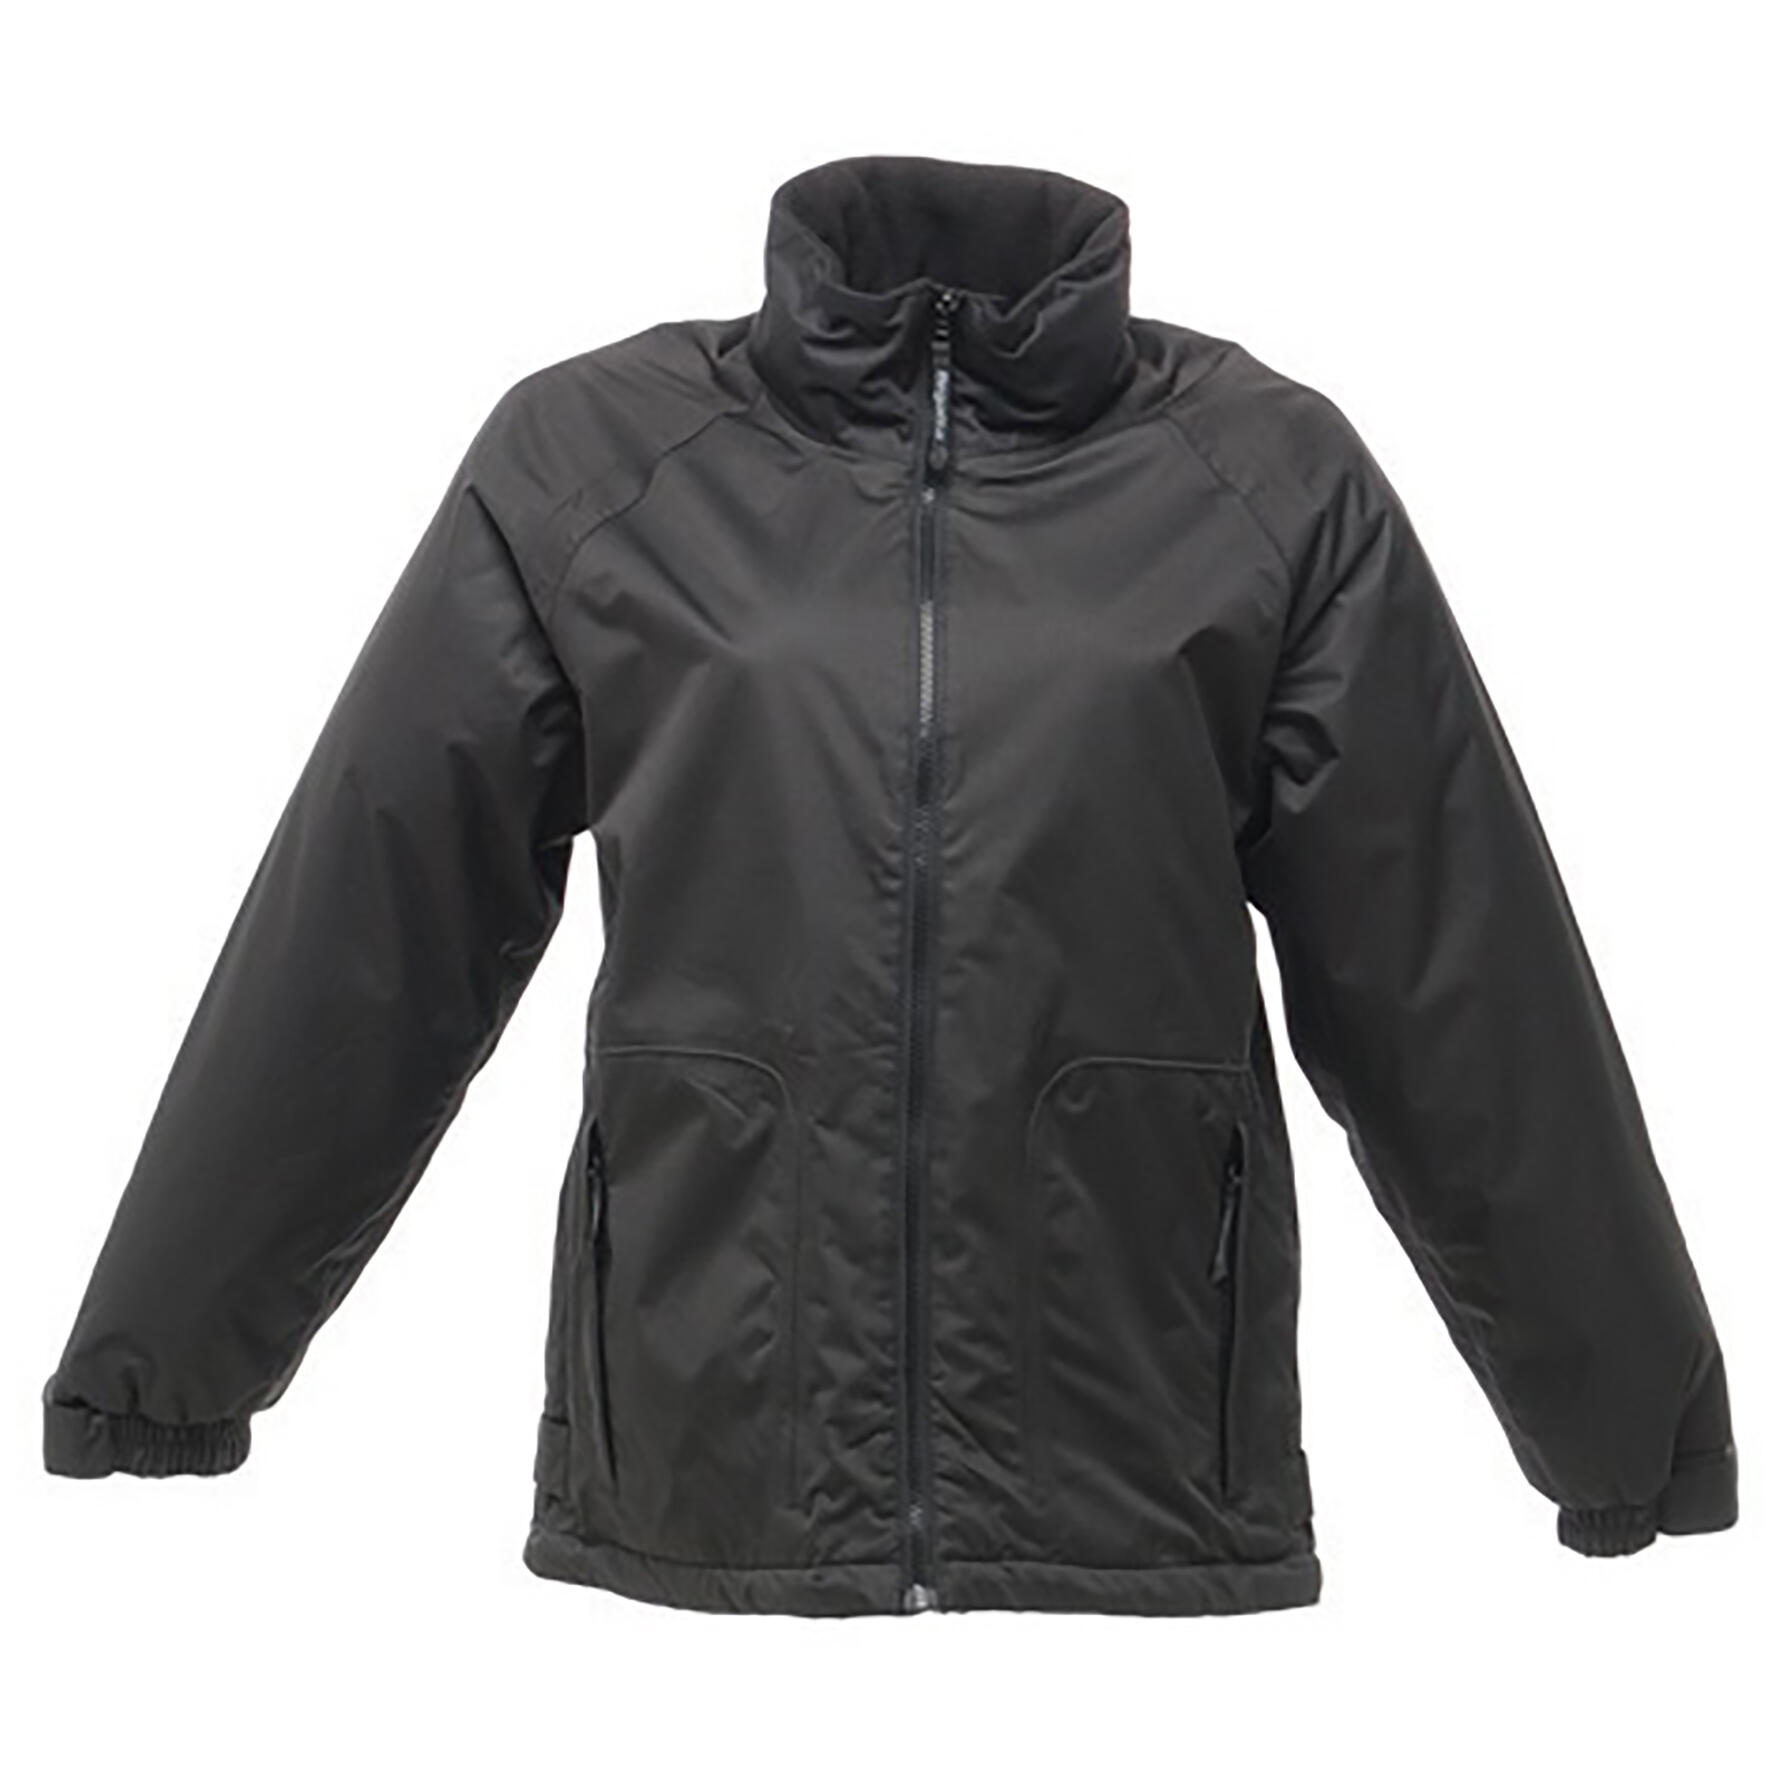 Great Outdoors Mens Waterproof Zip Up Jacket (Black) 1/4